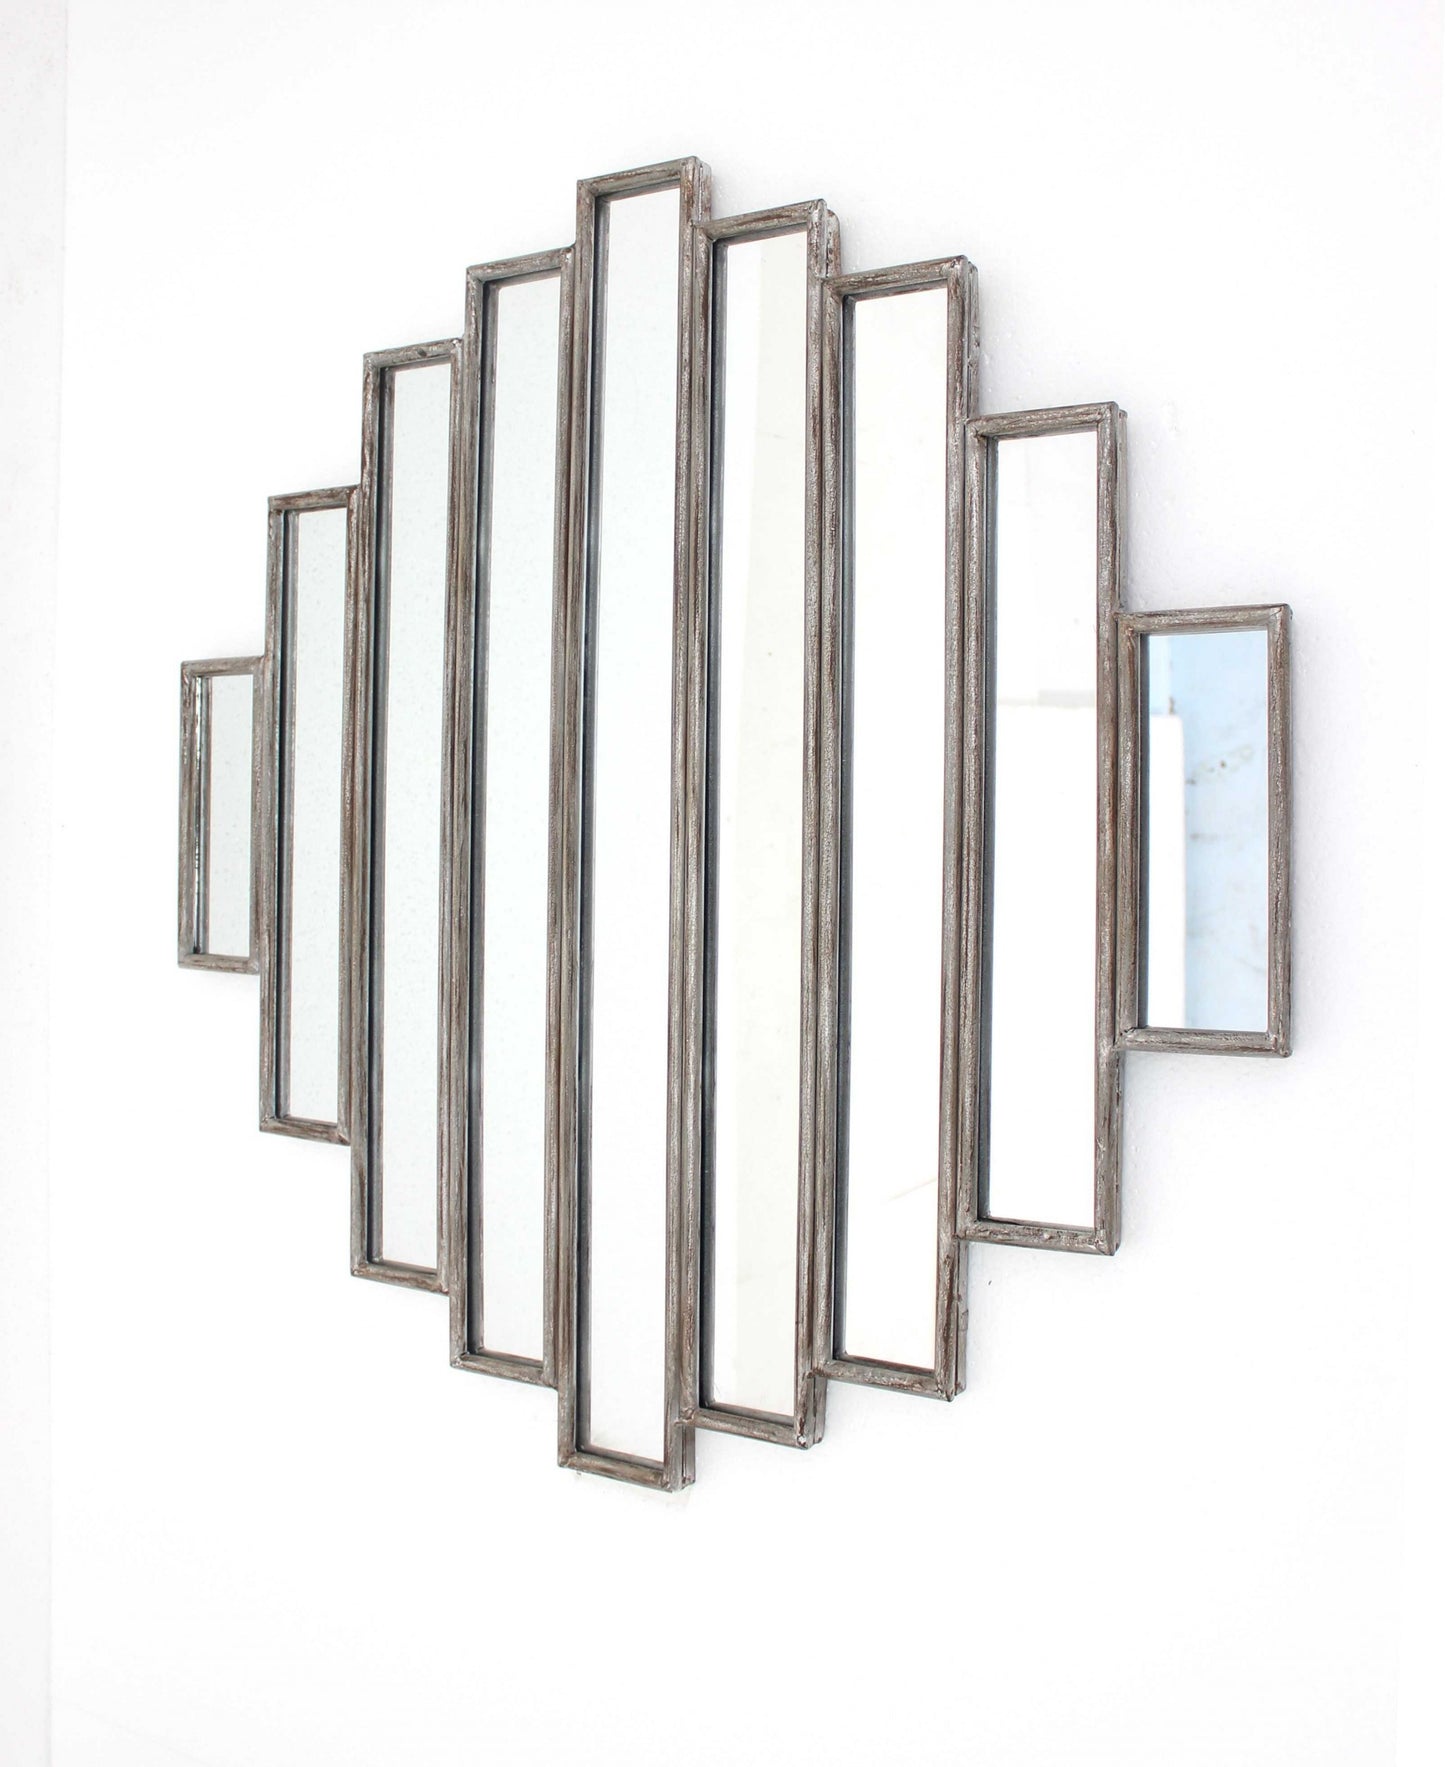 36" x 36" x 2" Silver Rustic Multi Mirrored Wall Sculpture